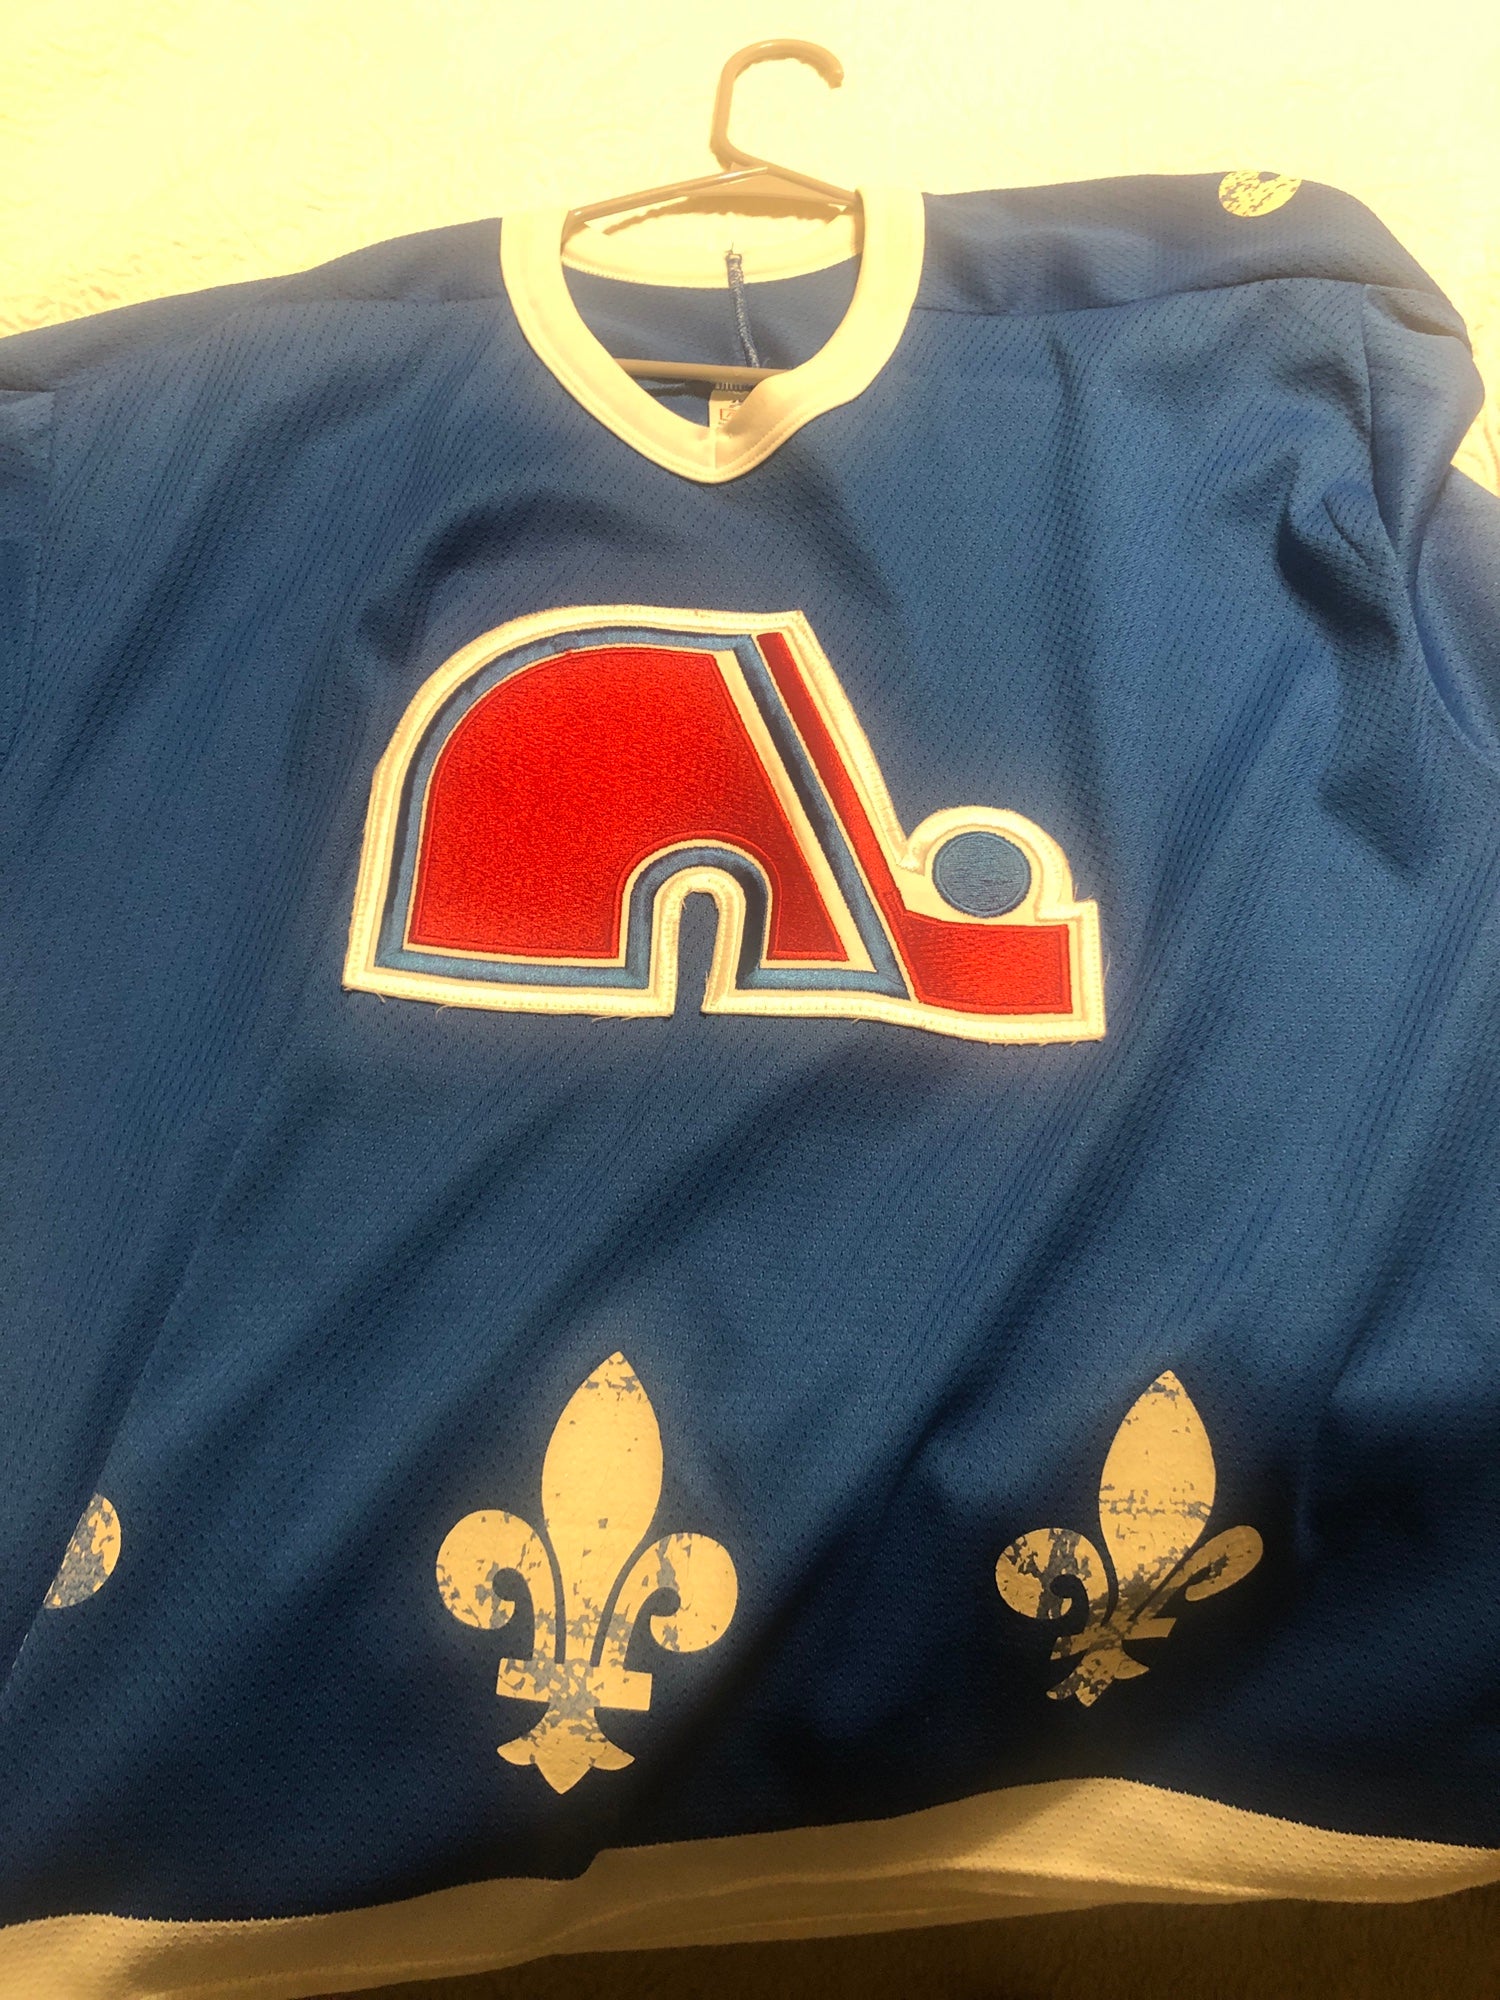 Quebec Nordiques Ron Hextall Hockey jersey